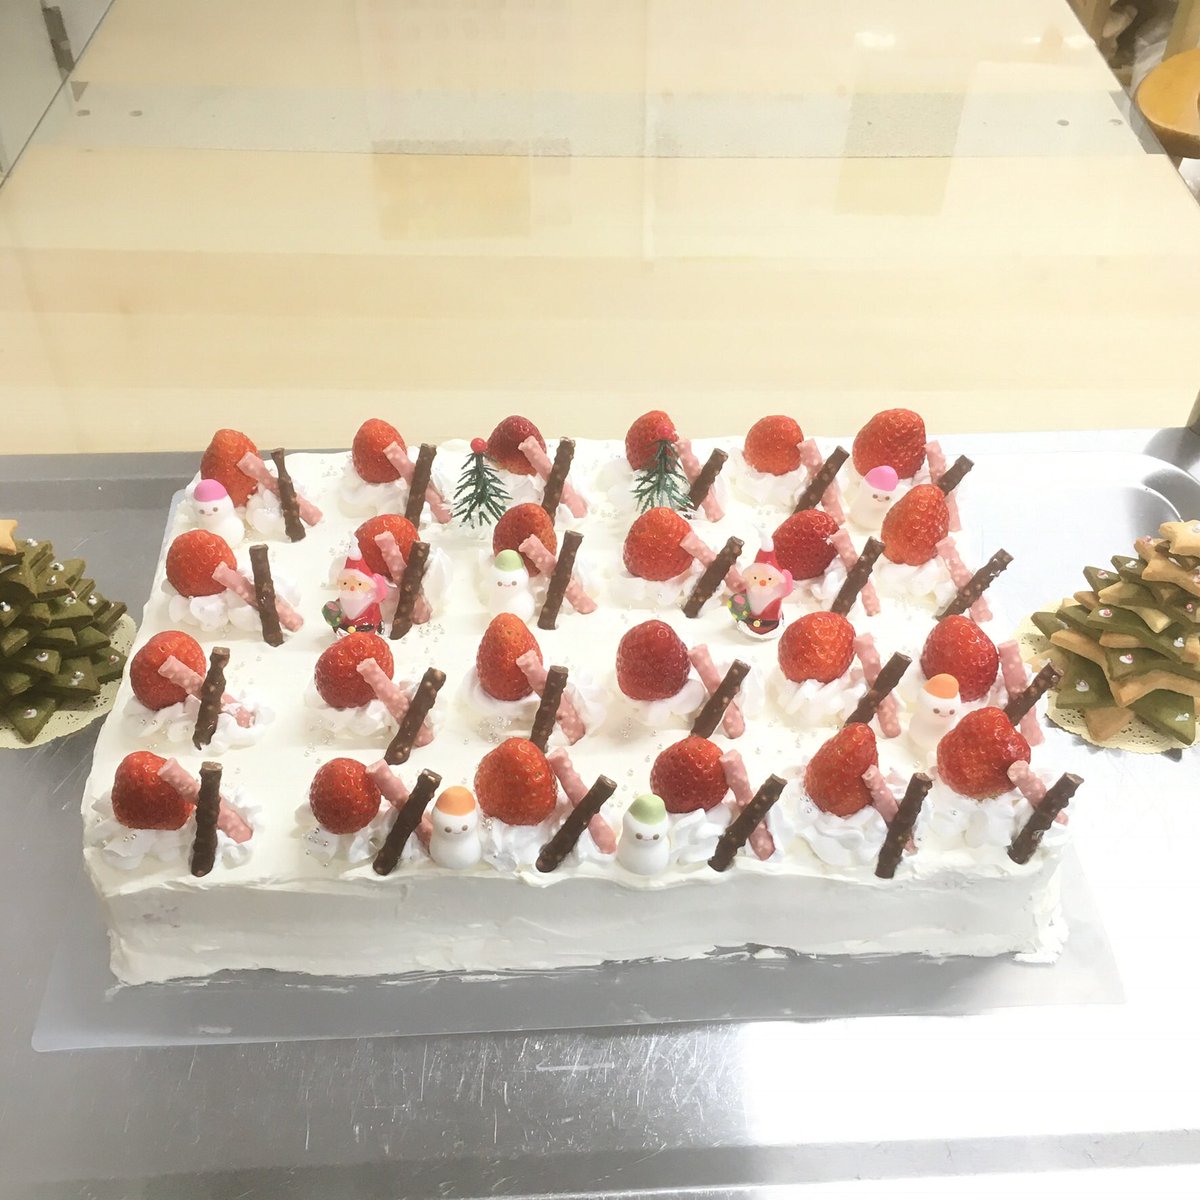 Kauri Cafe Factory در توییتر Kauriのクリスマスパーティー カラオケしたり ケーキつくったり コーヒードリップしたり 盛りだくさんで楽しみました 手作りケーキ 豪華で美味しかったなー 手作りケーキ クリスマス 伊奈町 就労継続支援